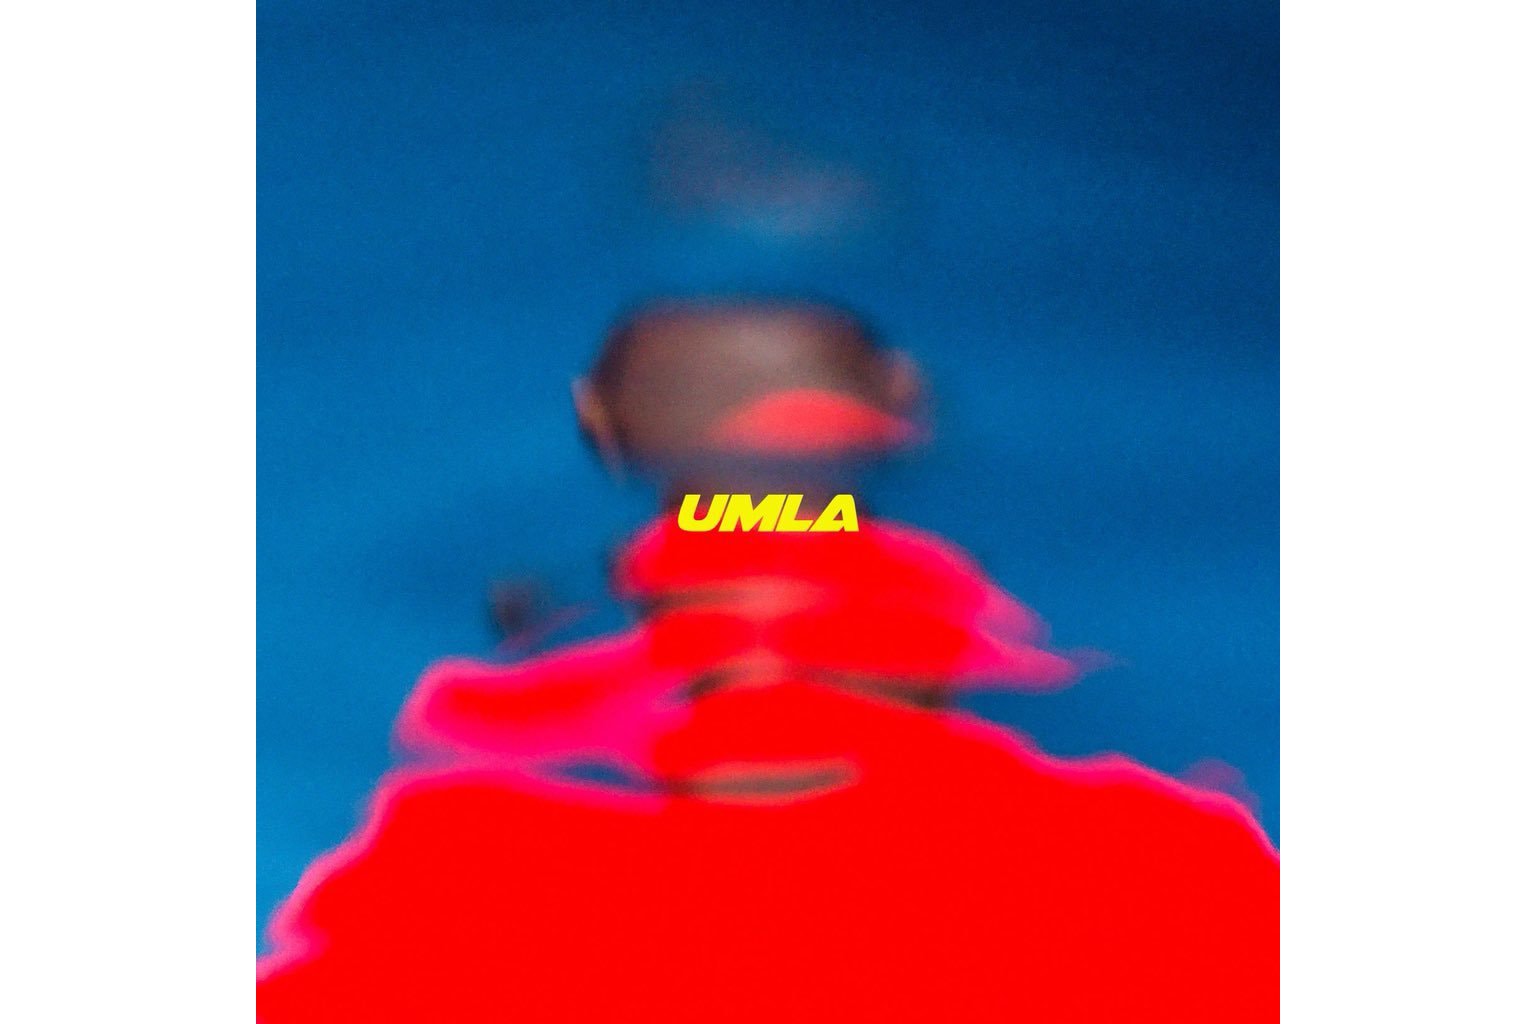 Alpha Wann Album UMLA Date Sortie Cover